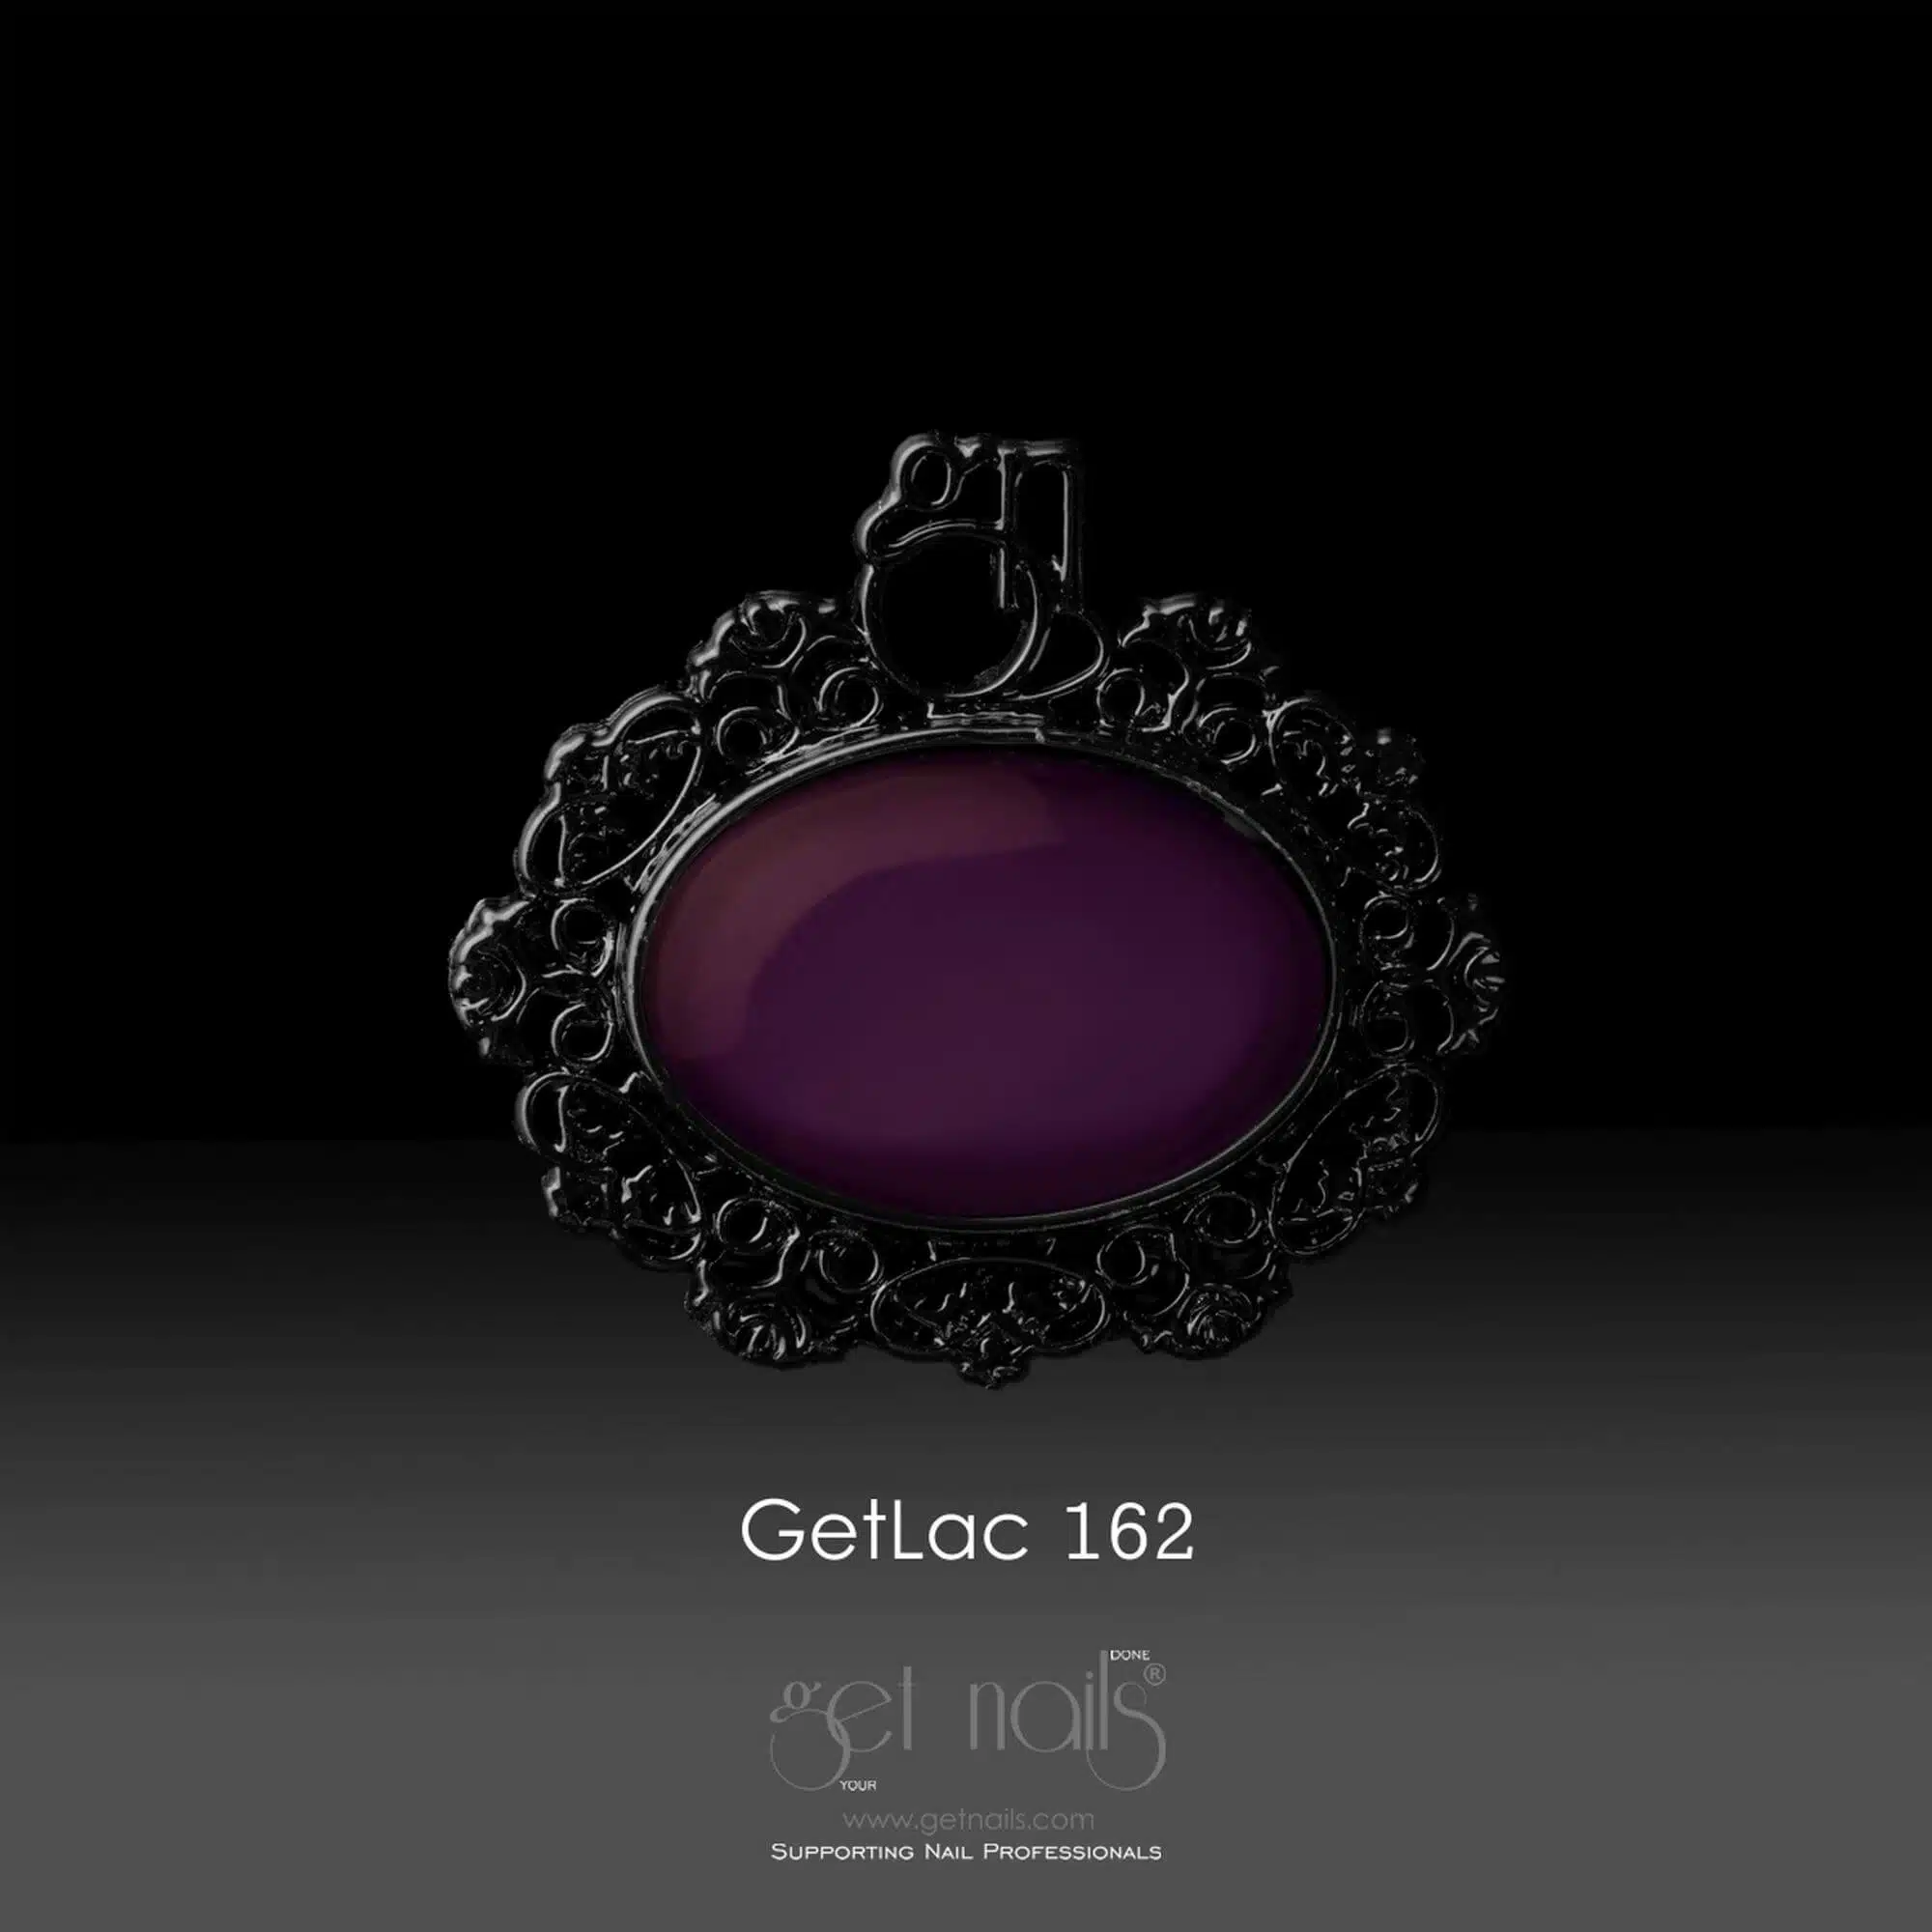 Get Nails Austria - GetLac 162 15 g